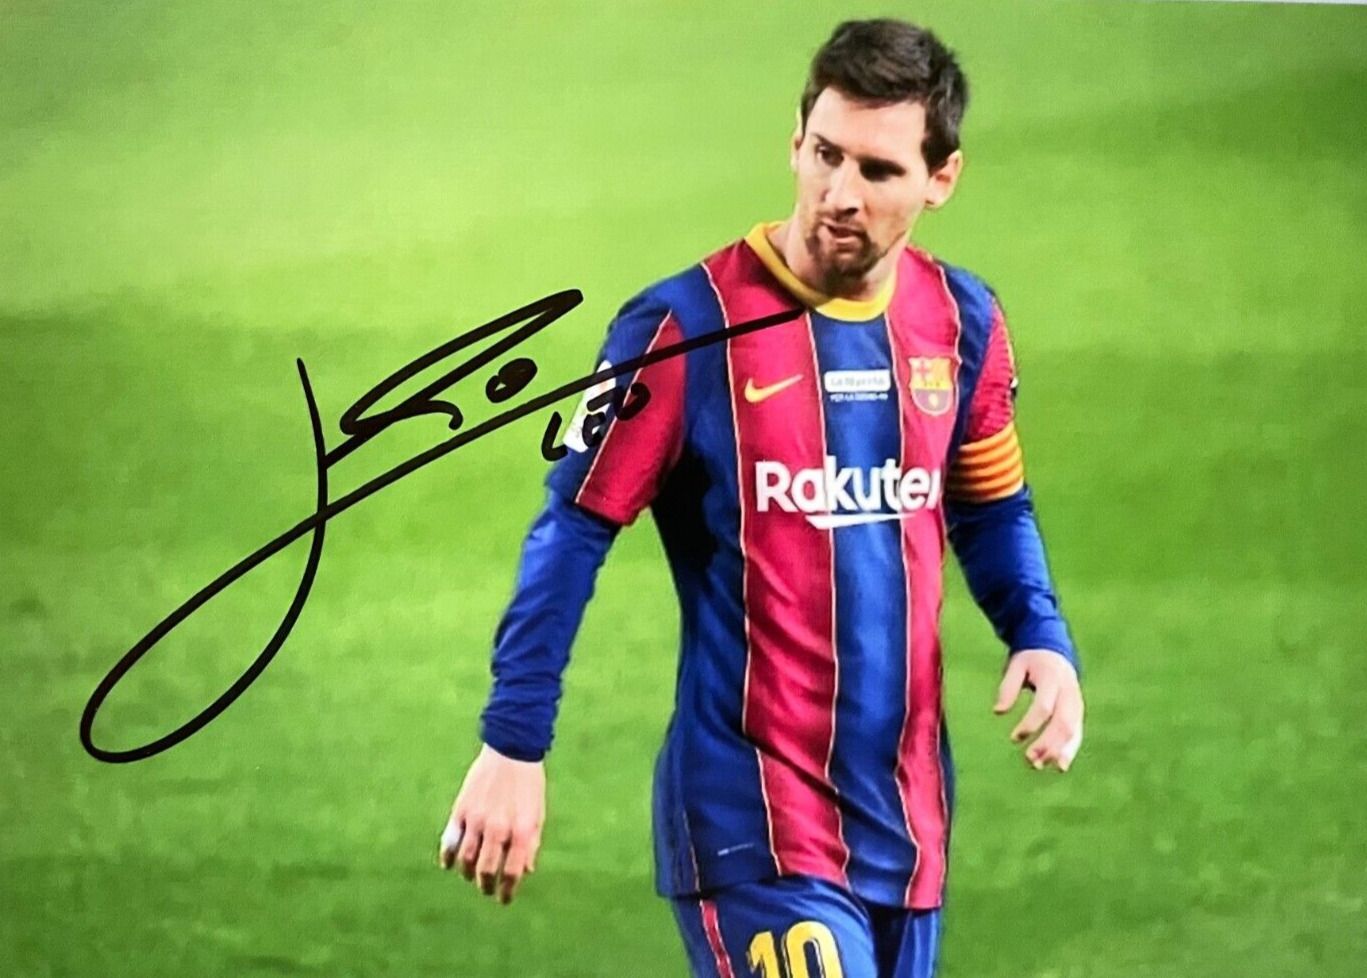 LIONEL MESSI (Barcelona Soccer) Hand Signed 7x5